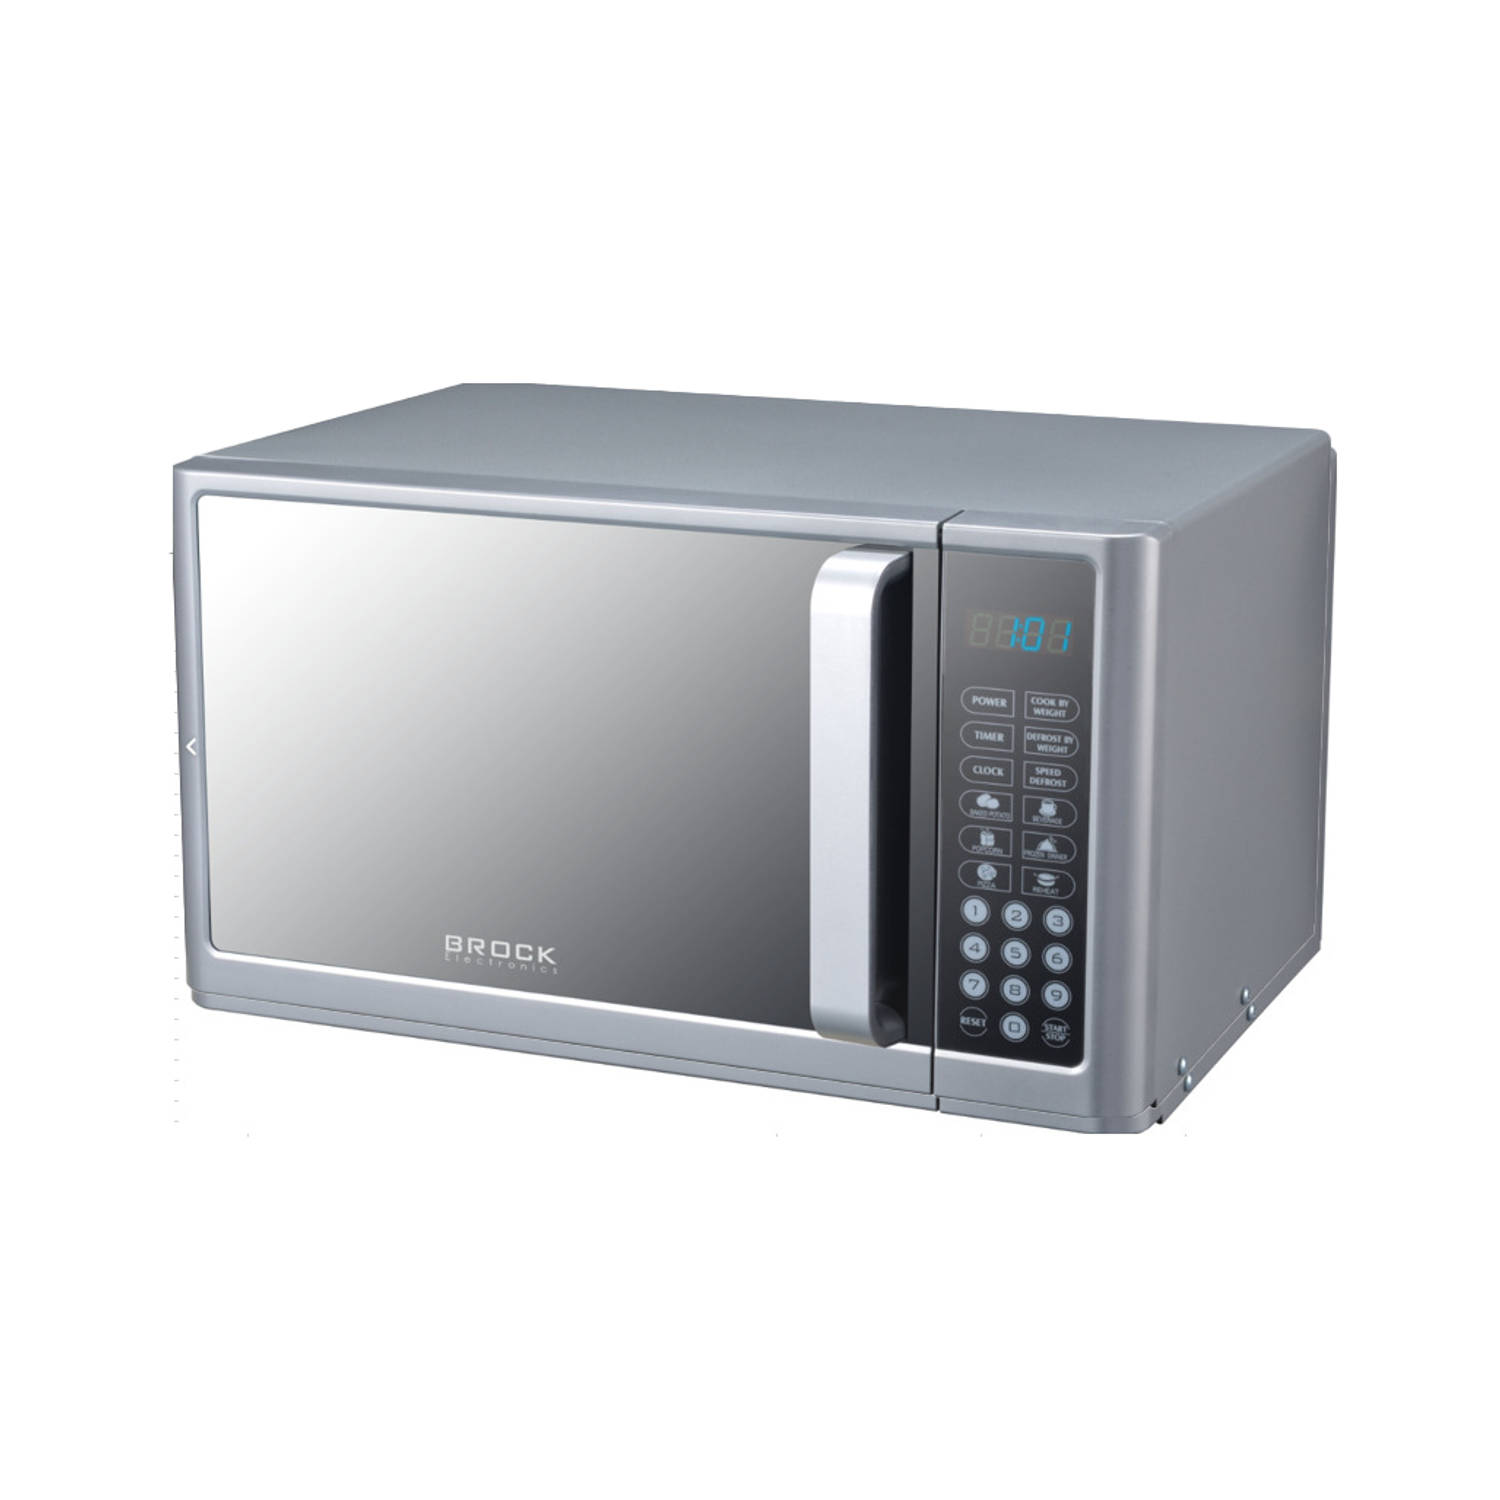 Brock MWO 2311 DS Digitale Magnetron - Microwave Oven - 23 liter - Grijs